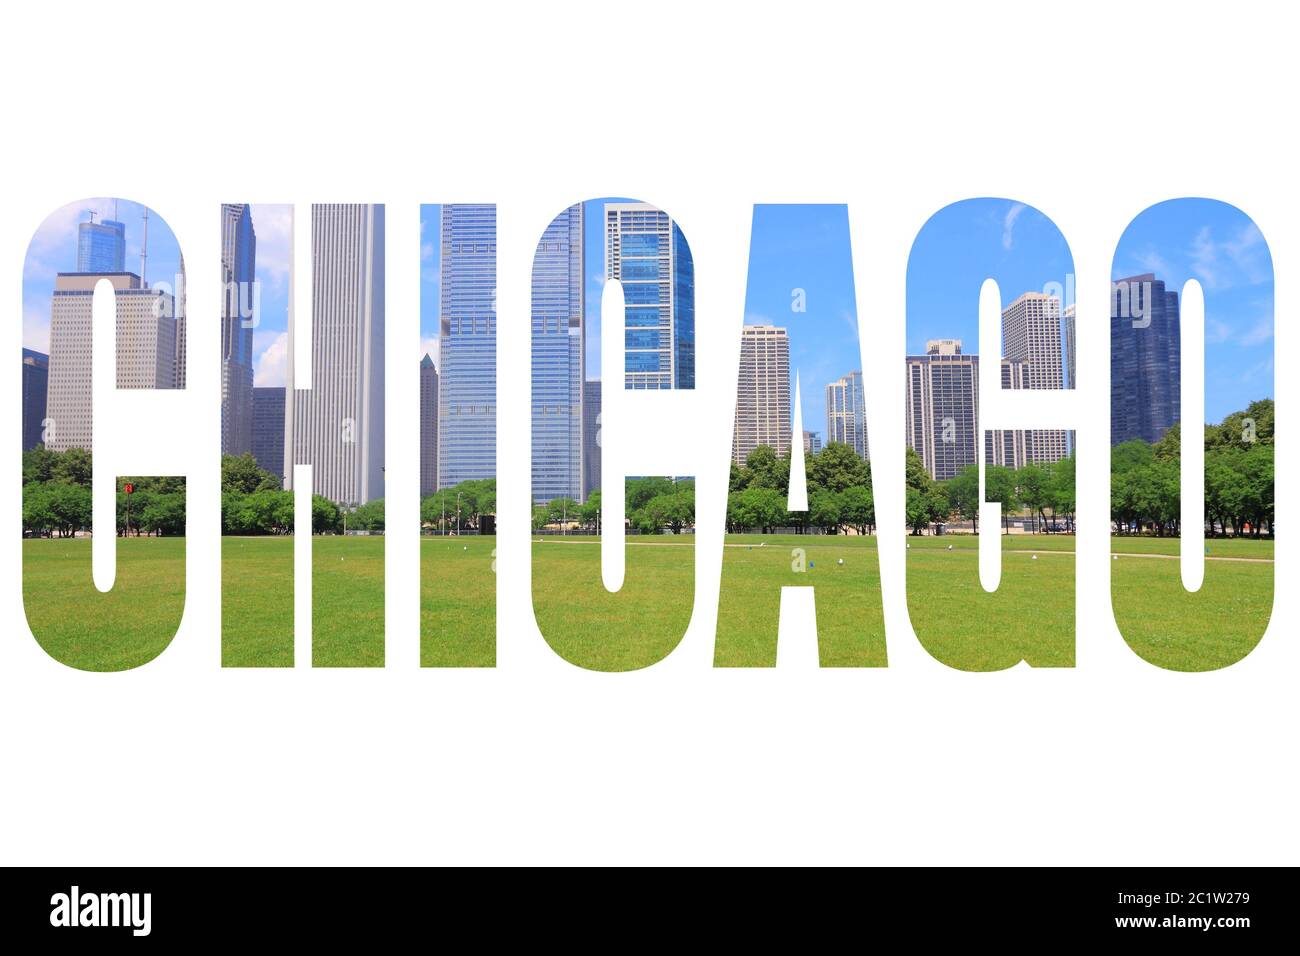 Chicago city name - USA travel destination sign on white background. Stock Photo